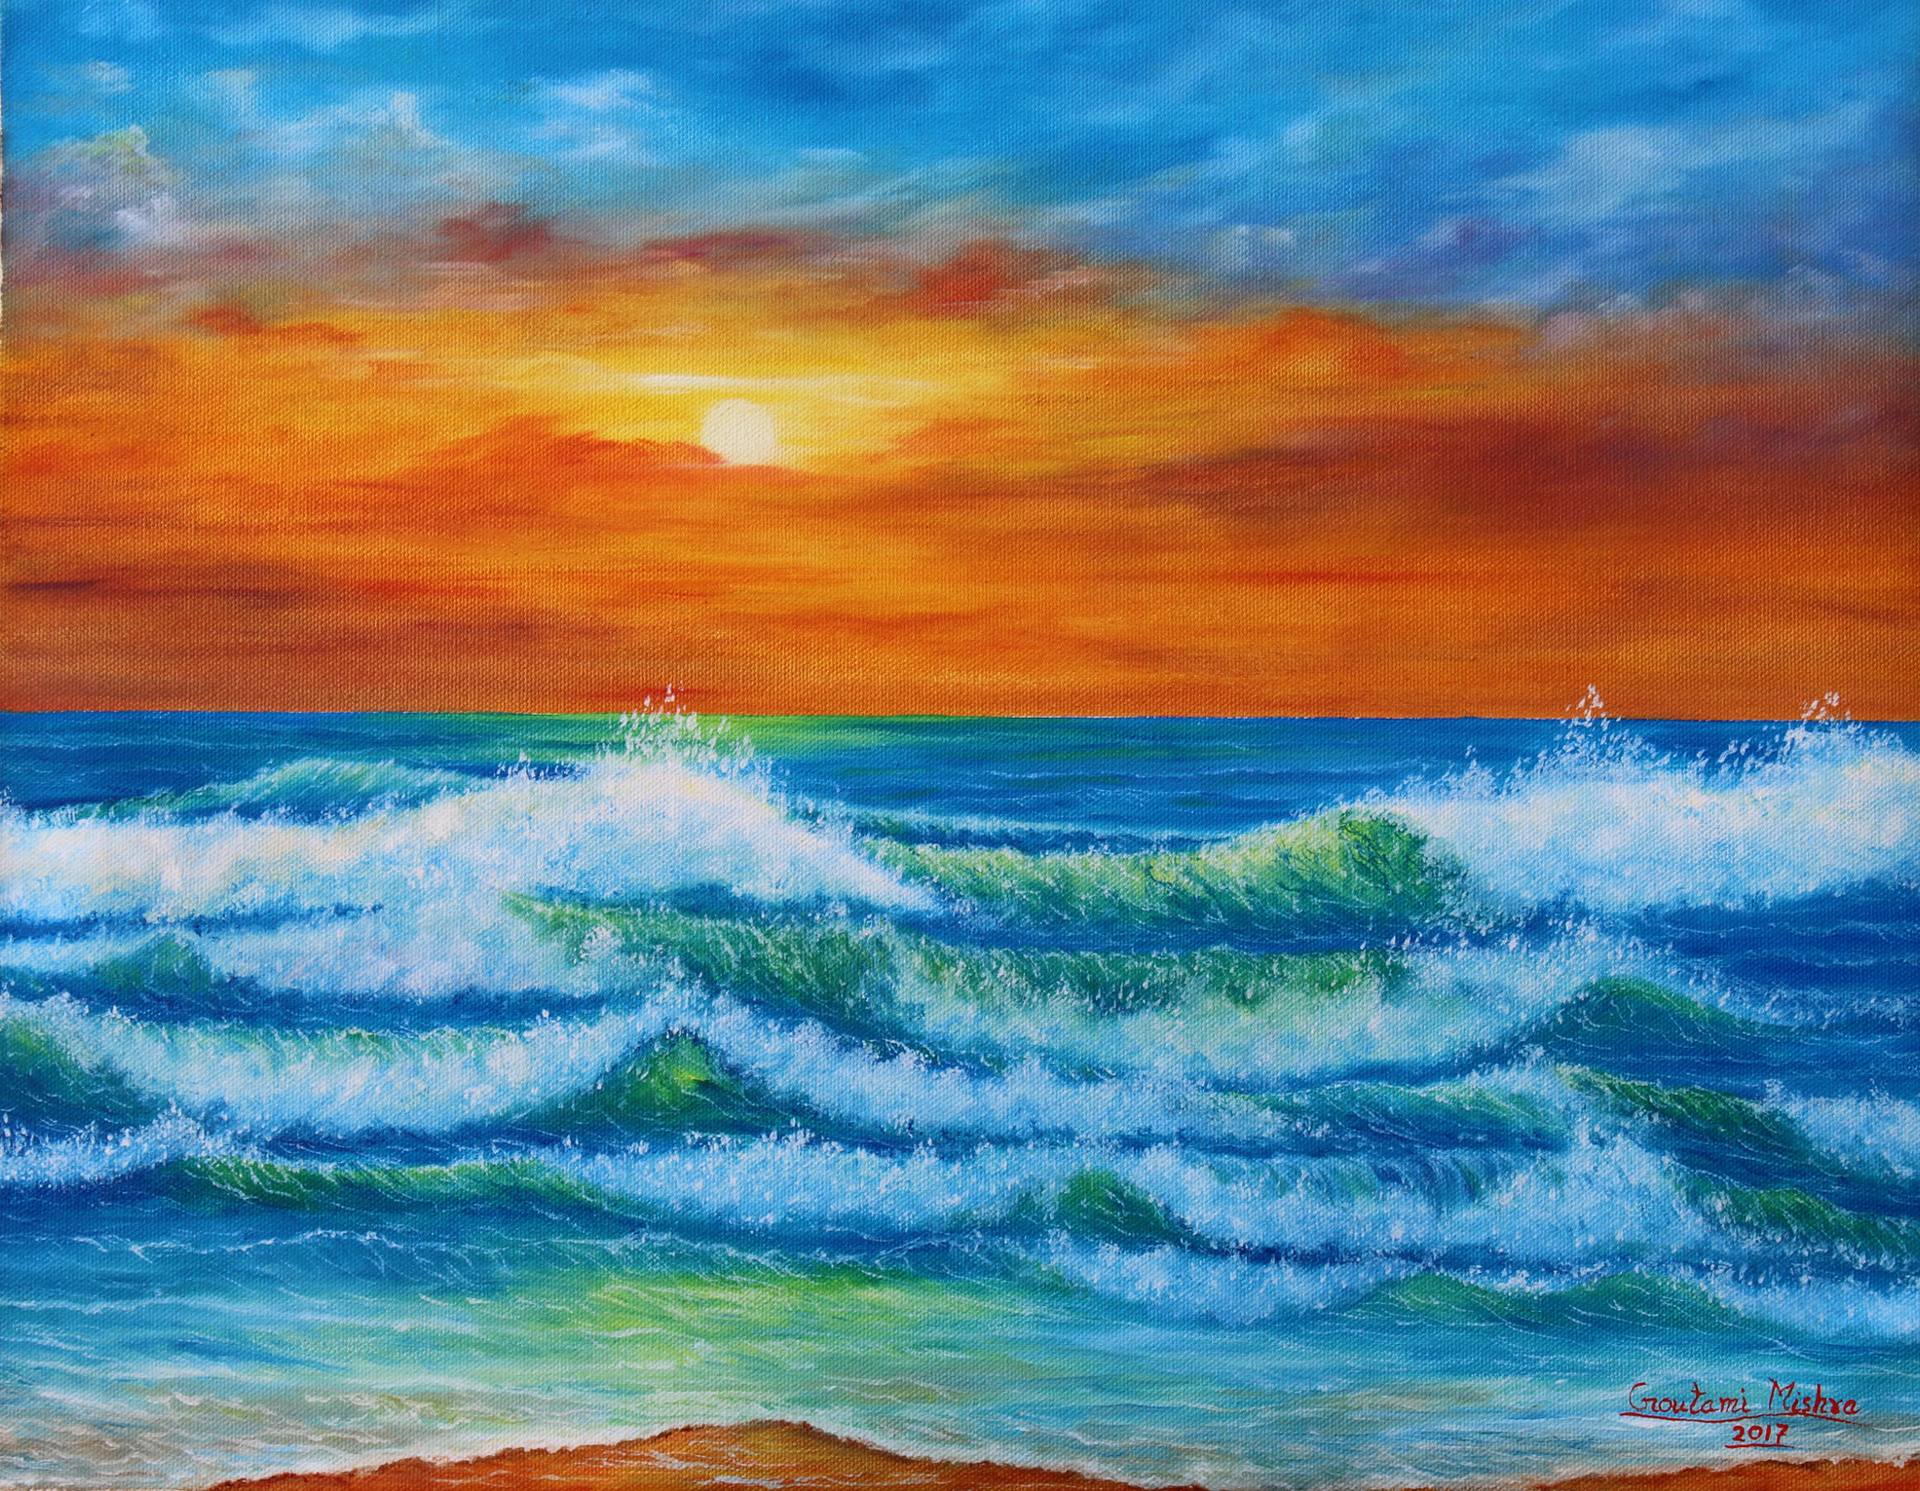 beach waves at sunset